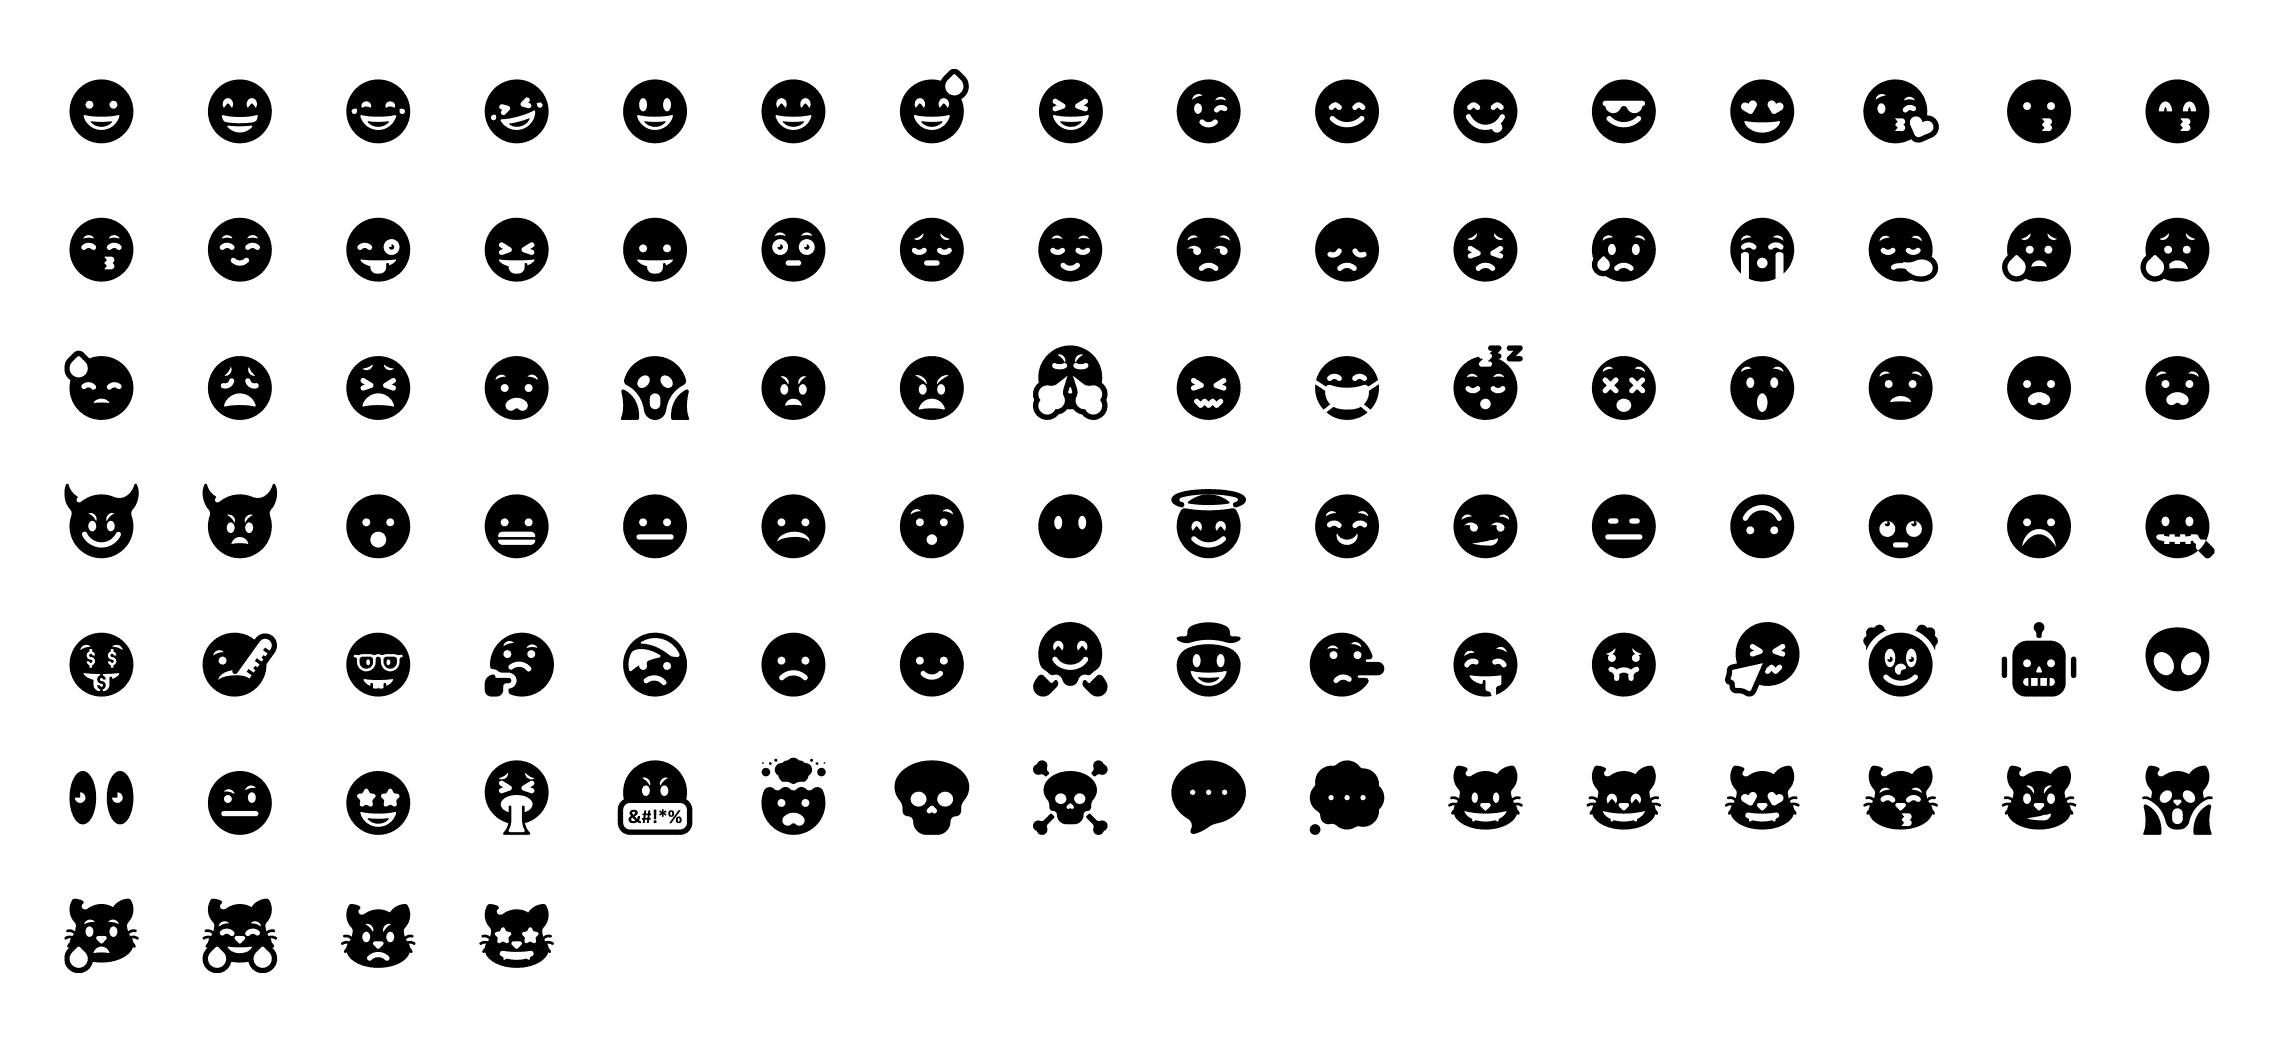 emoji-icons-preview